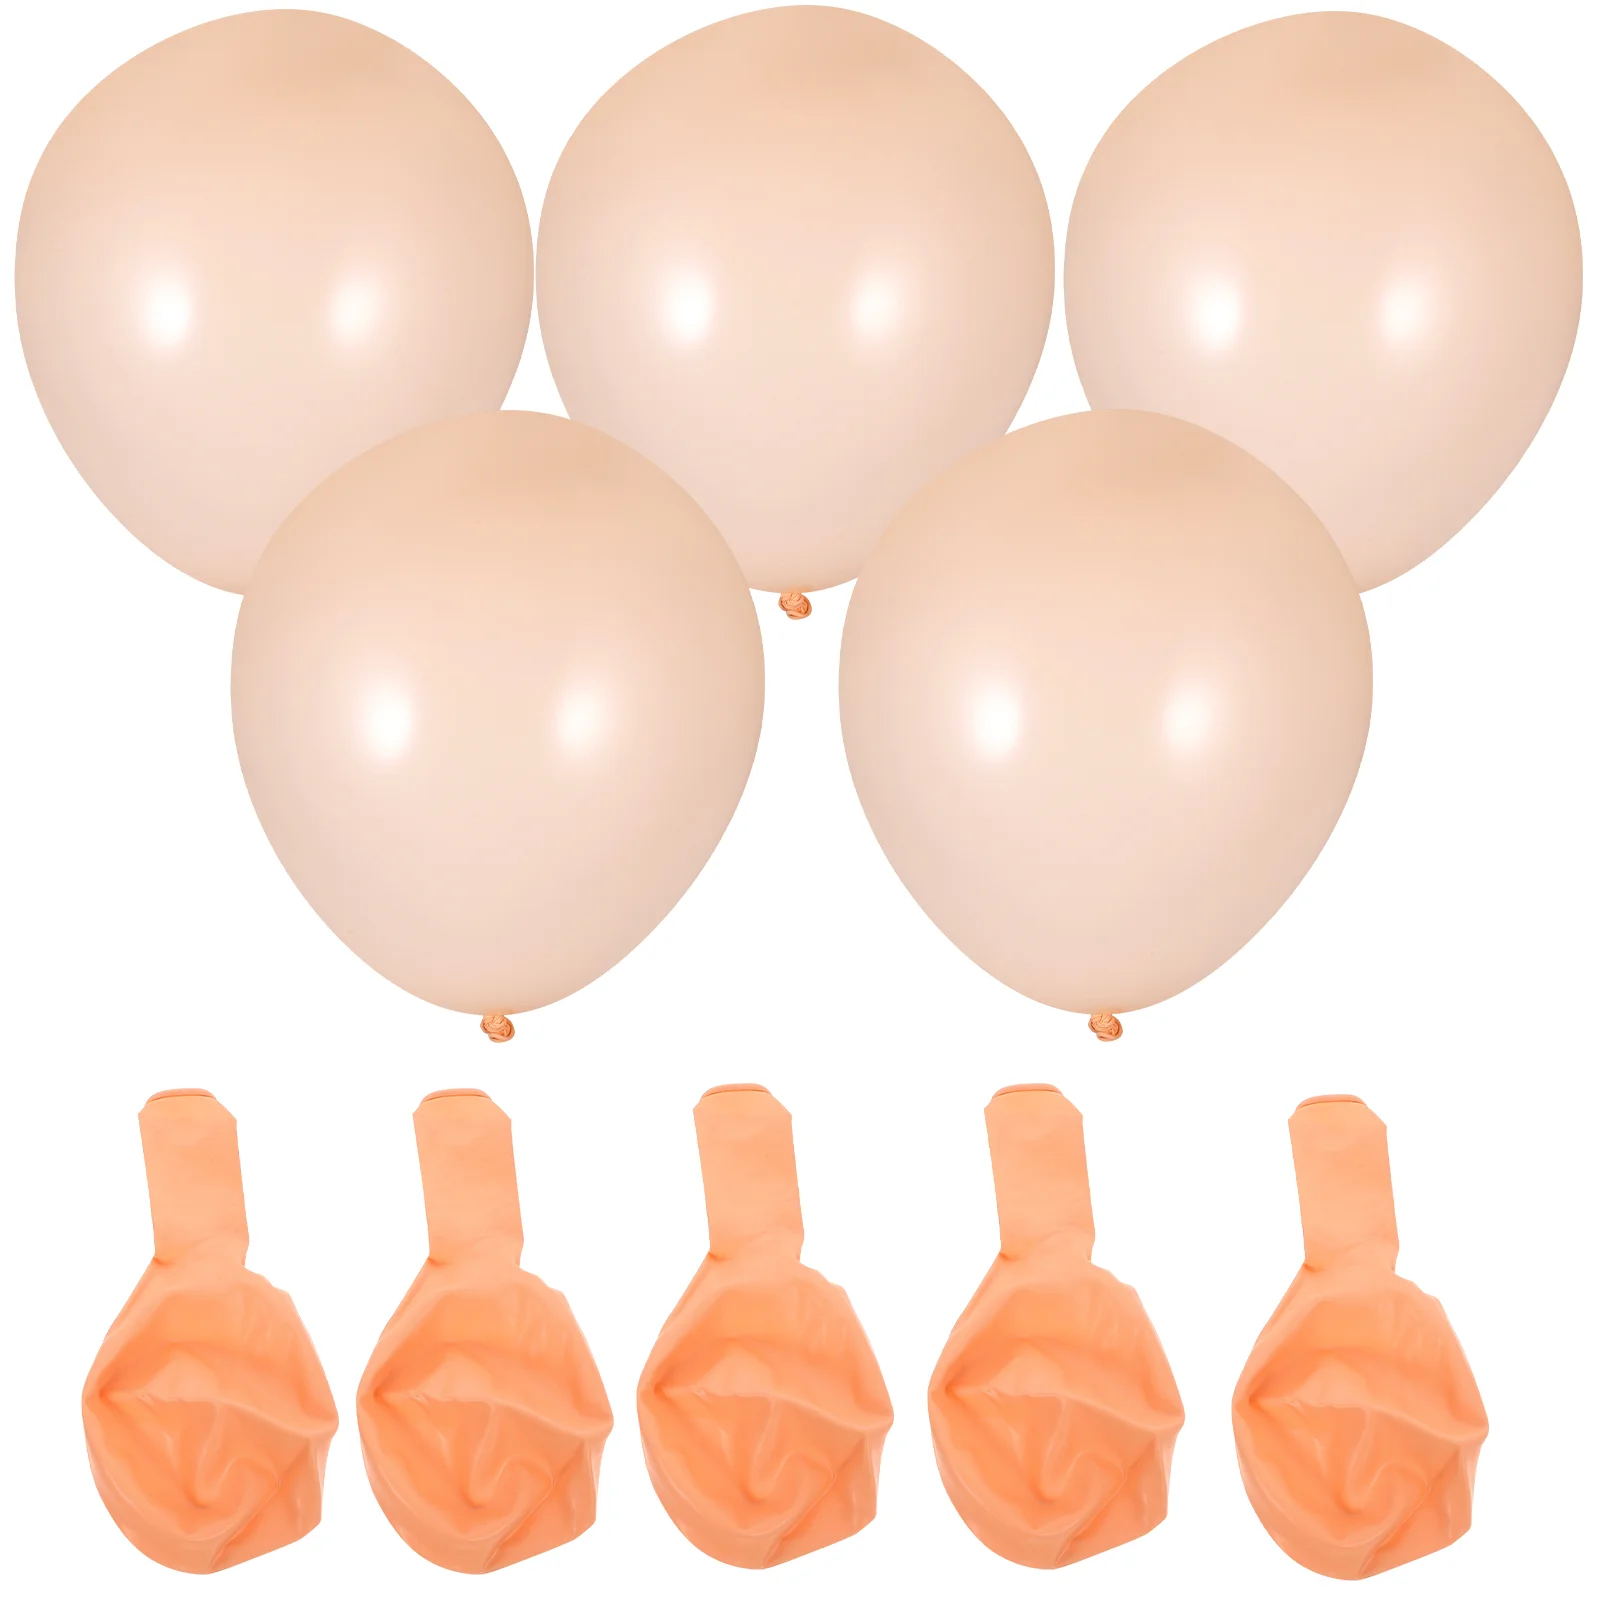 

10 Pcs Latex Balloons Reception Wedding Kit Christmas Ornament Props Decor Party Decors Large Arch